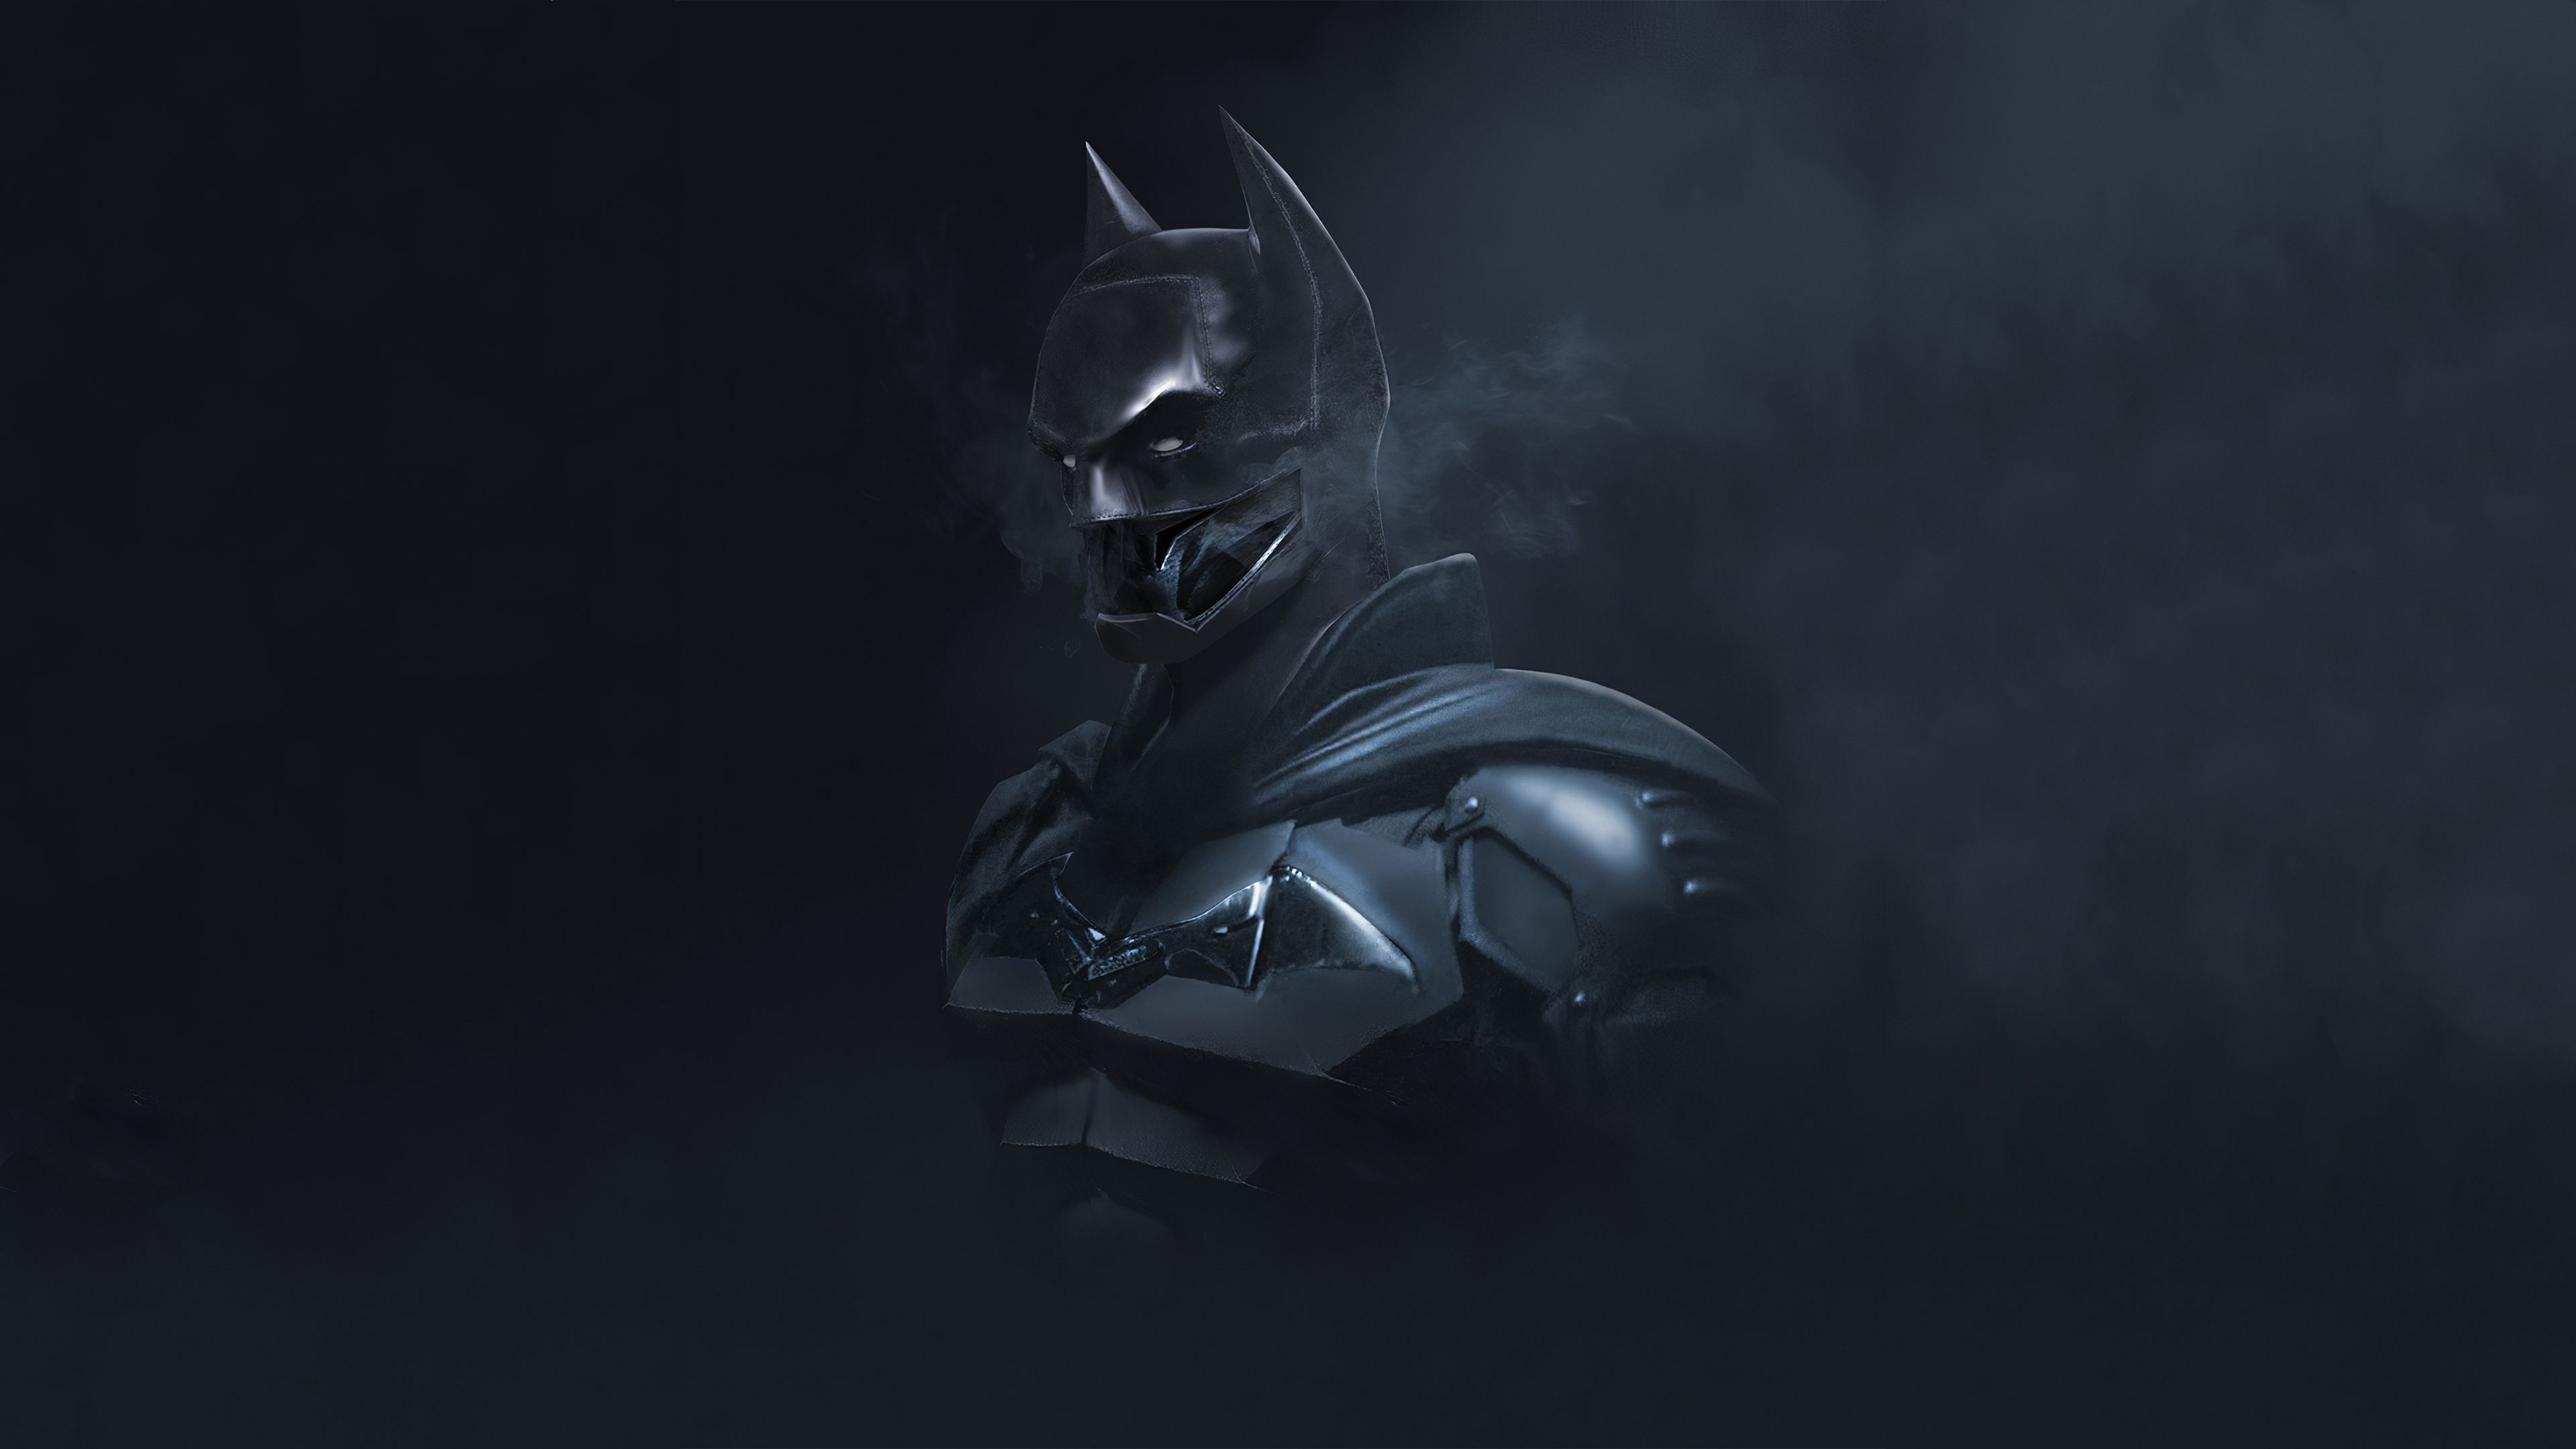 The Batman 4k Wallpapers  Top Ultra 4k The Batman Backgrounds Download